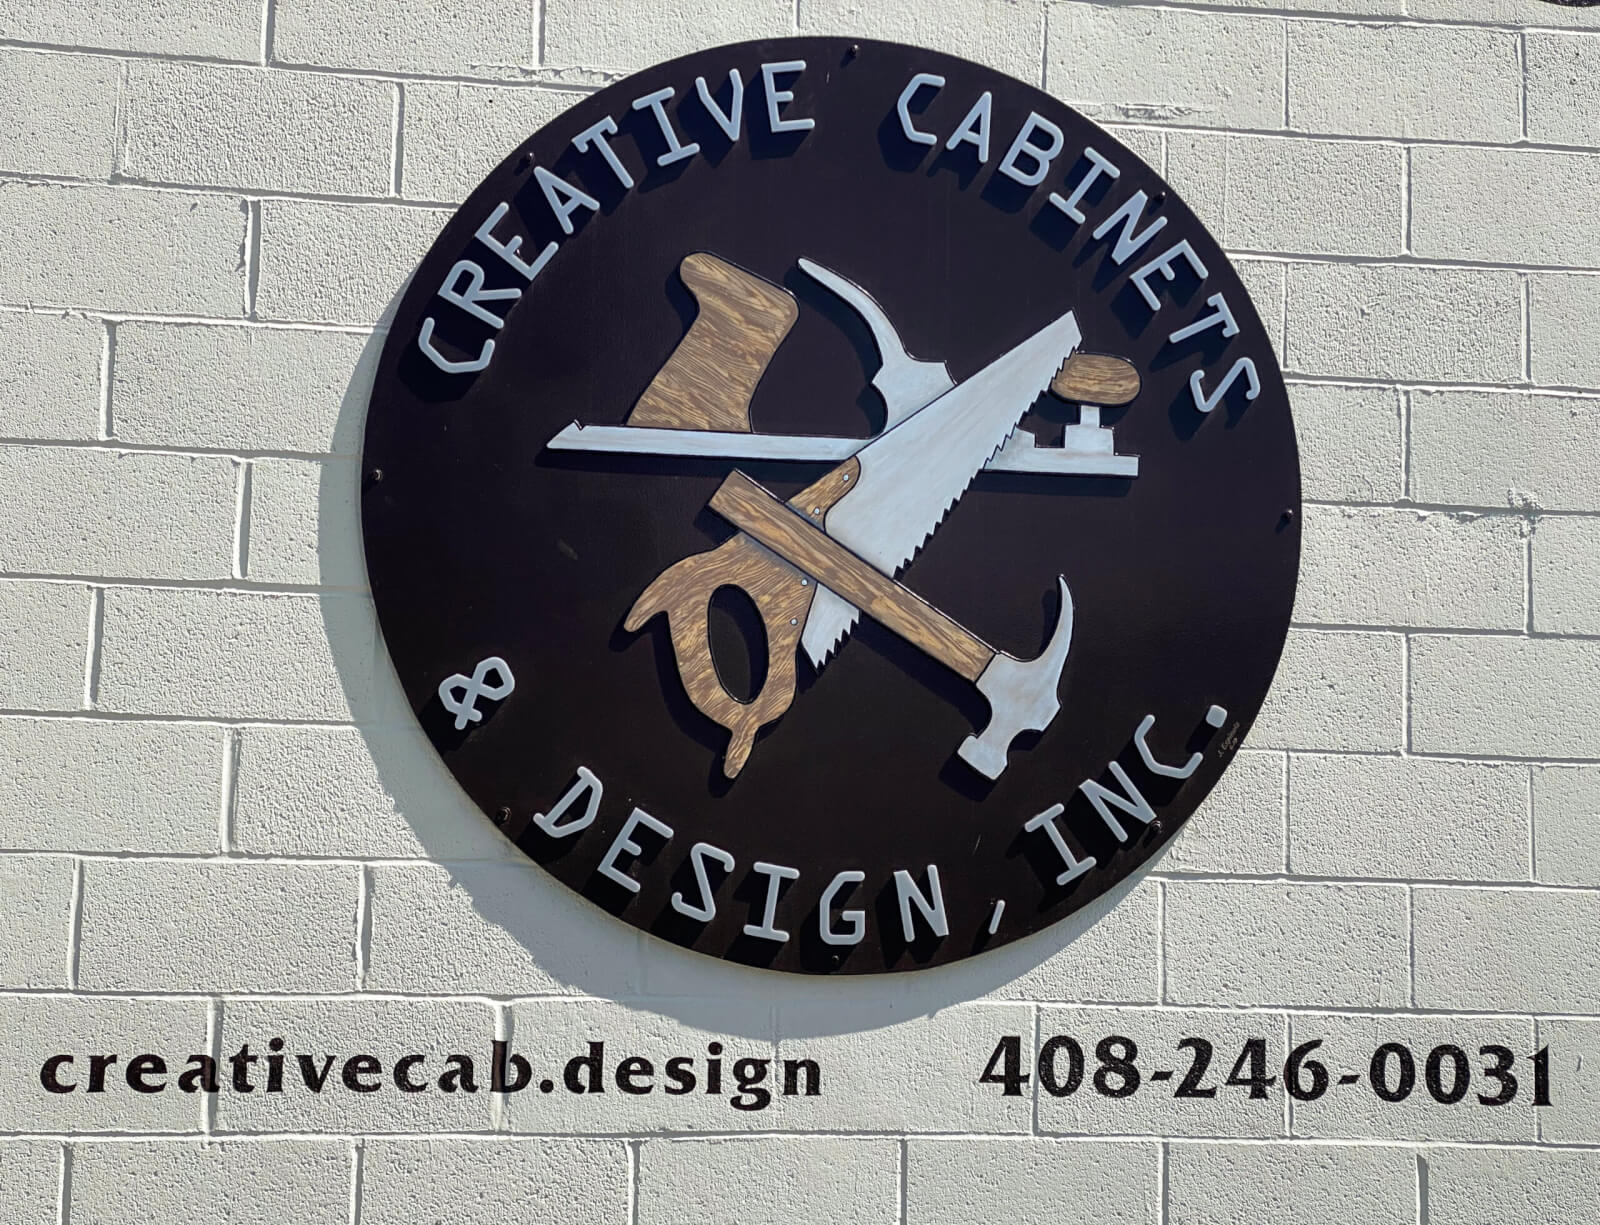 San Jose dimensional letters sign creative cabinets design close up